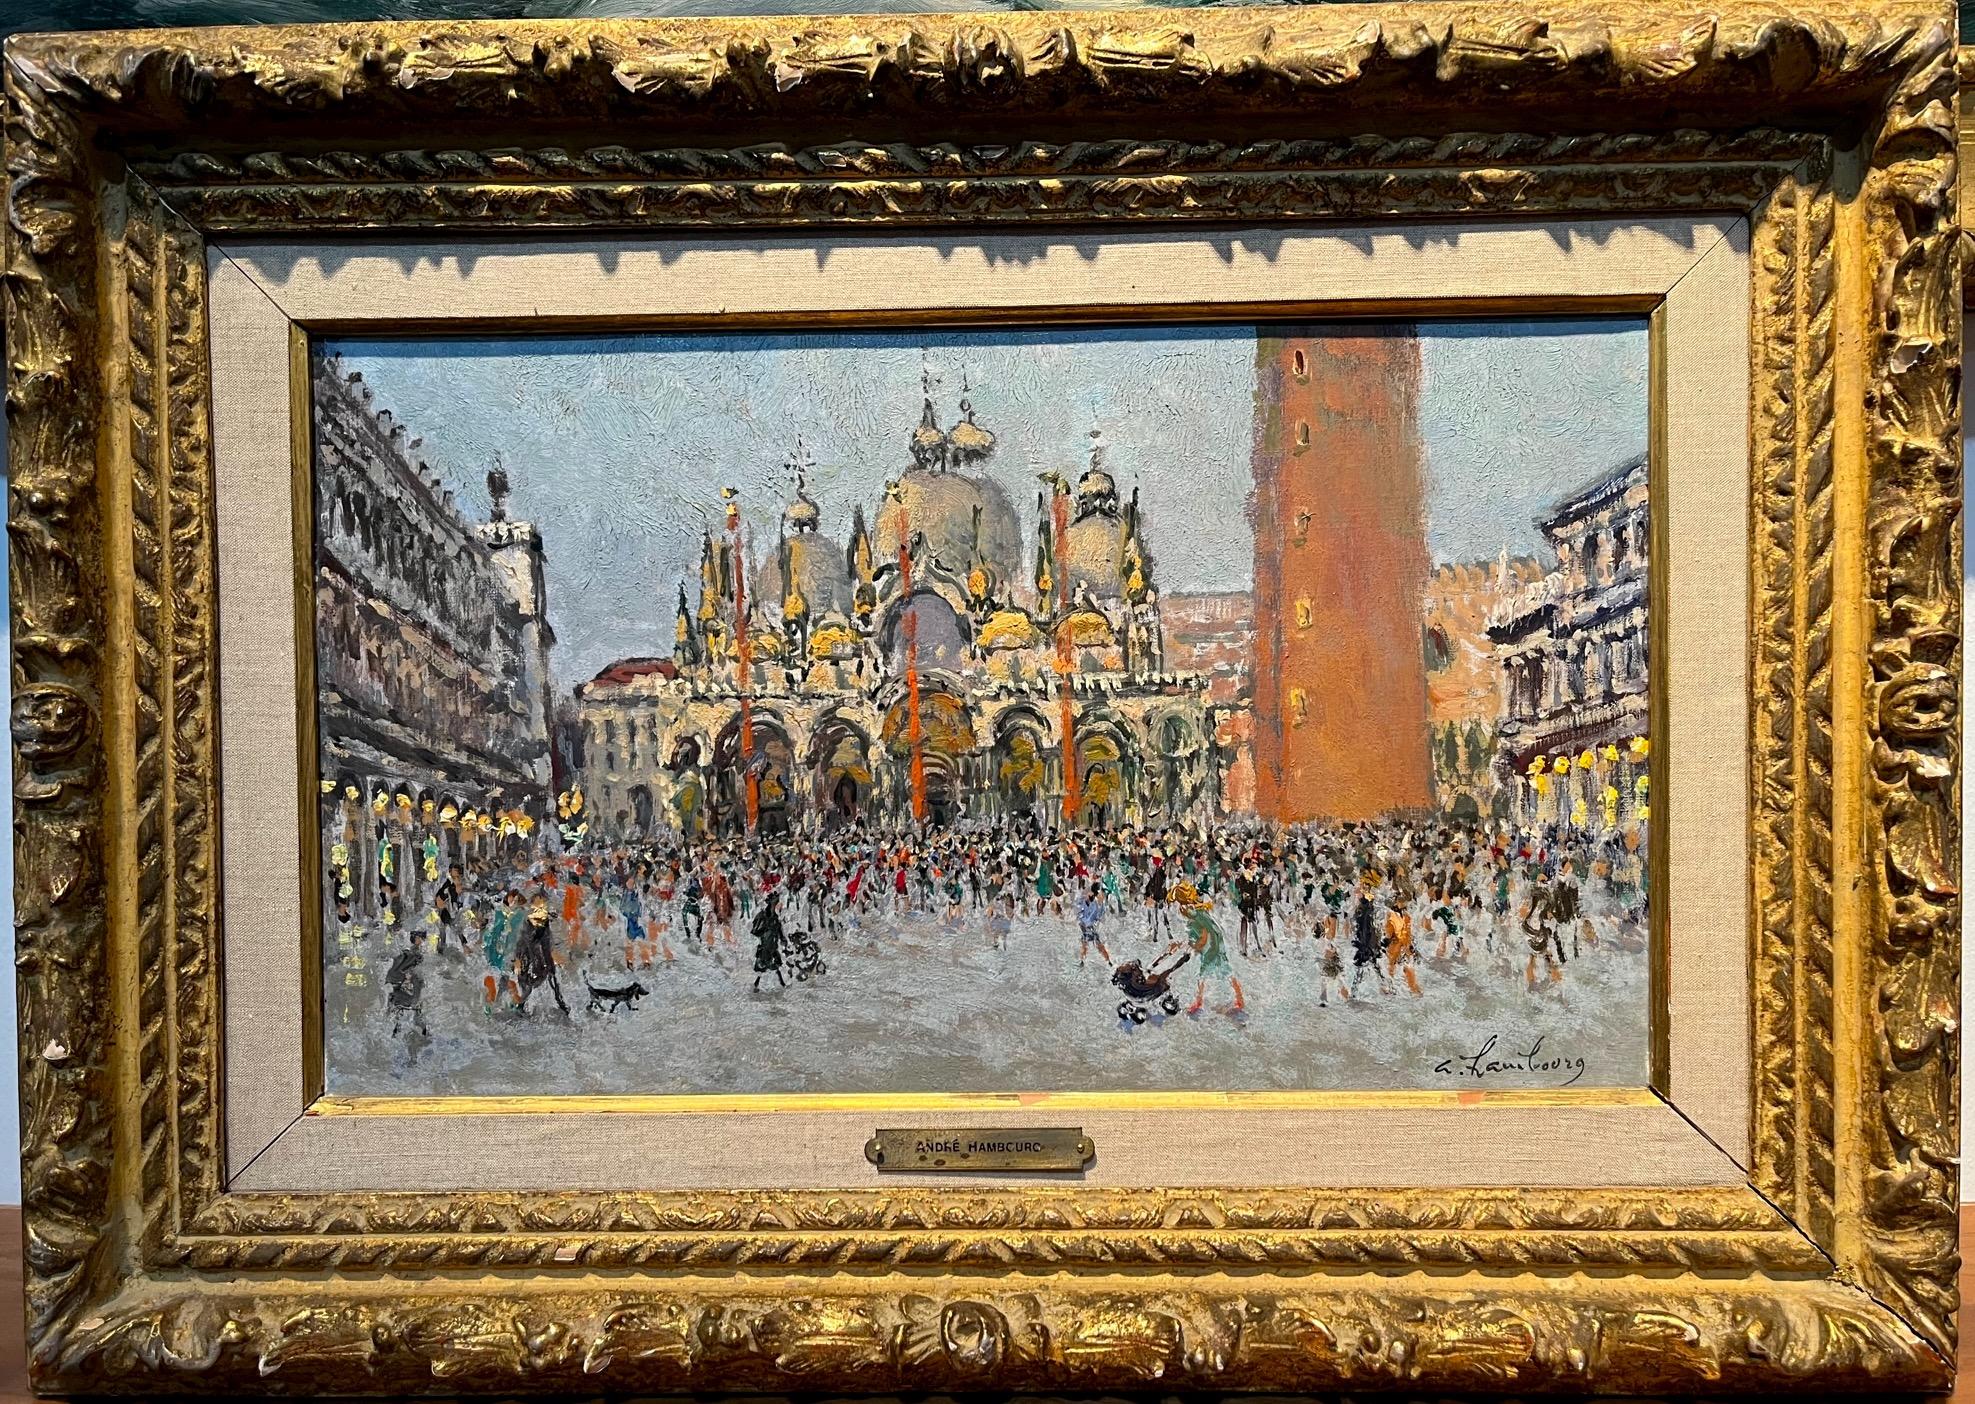 Saint-Marks-square, Venedig – Painting von Andre Hambourg